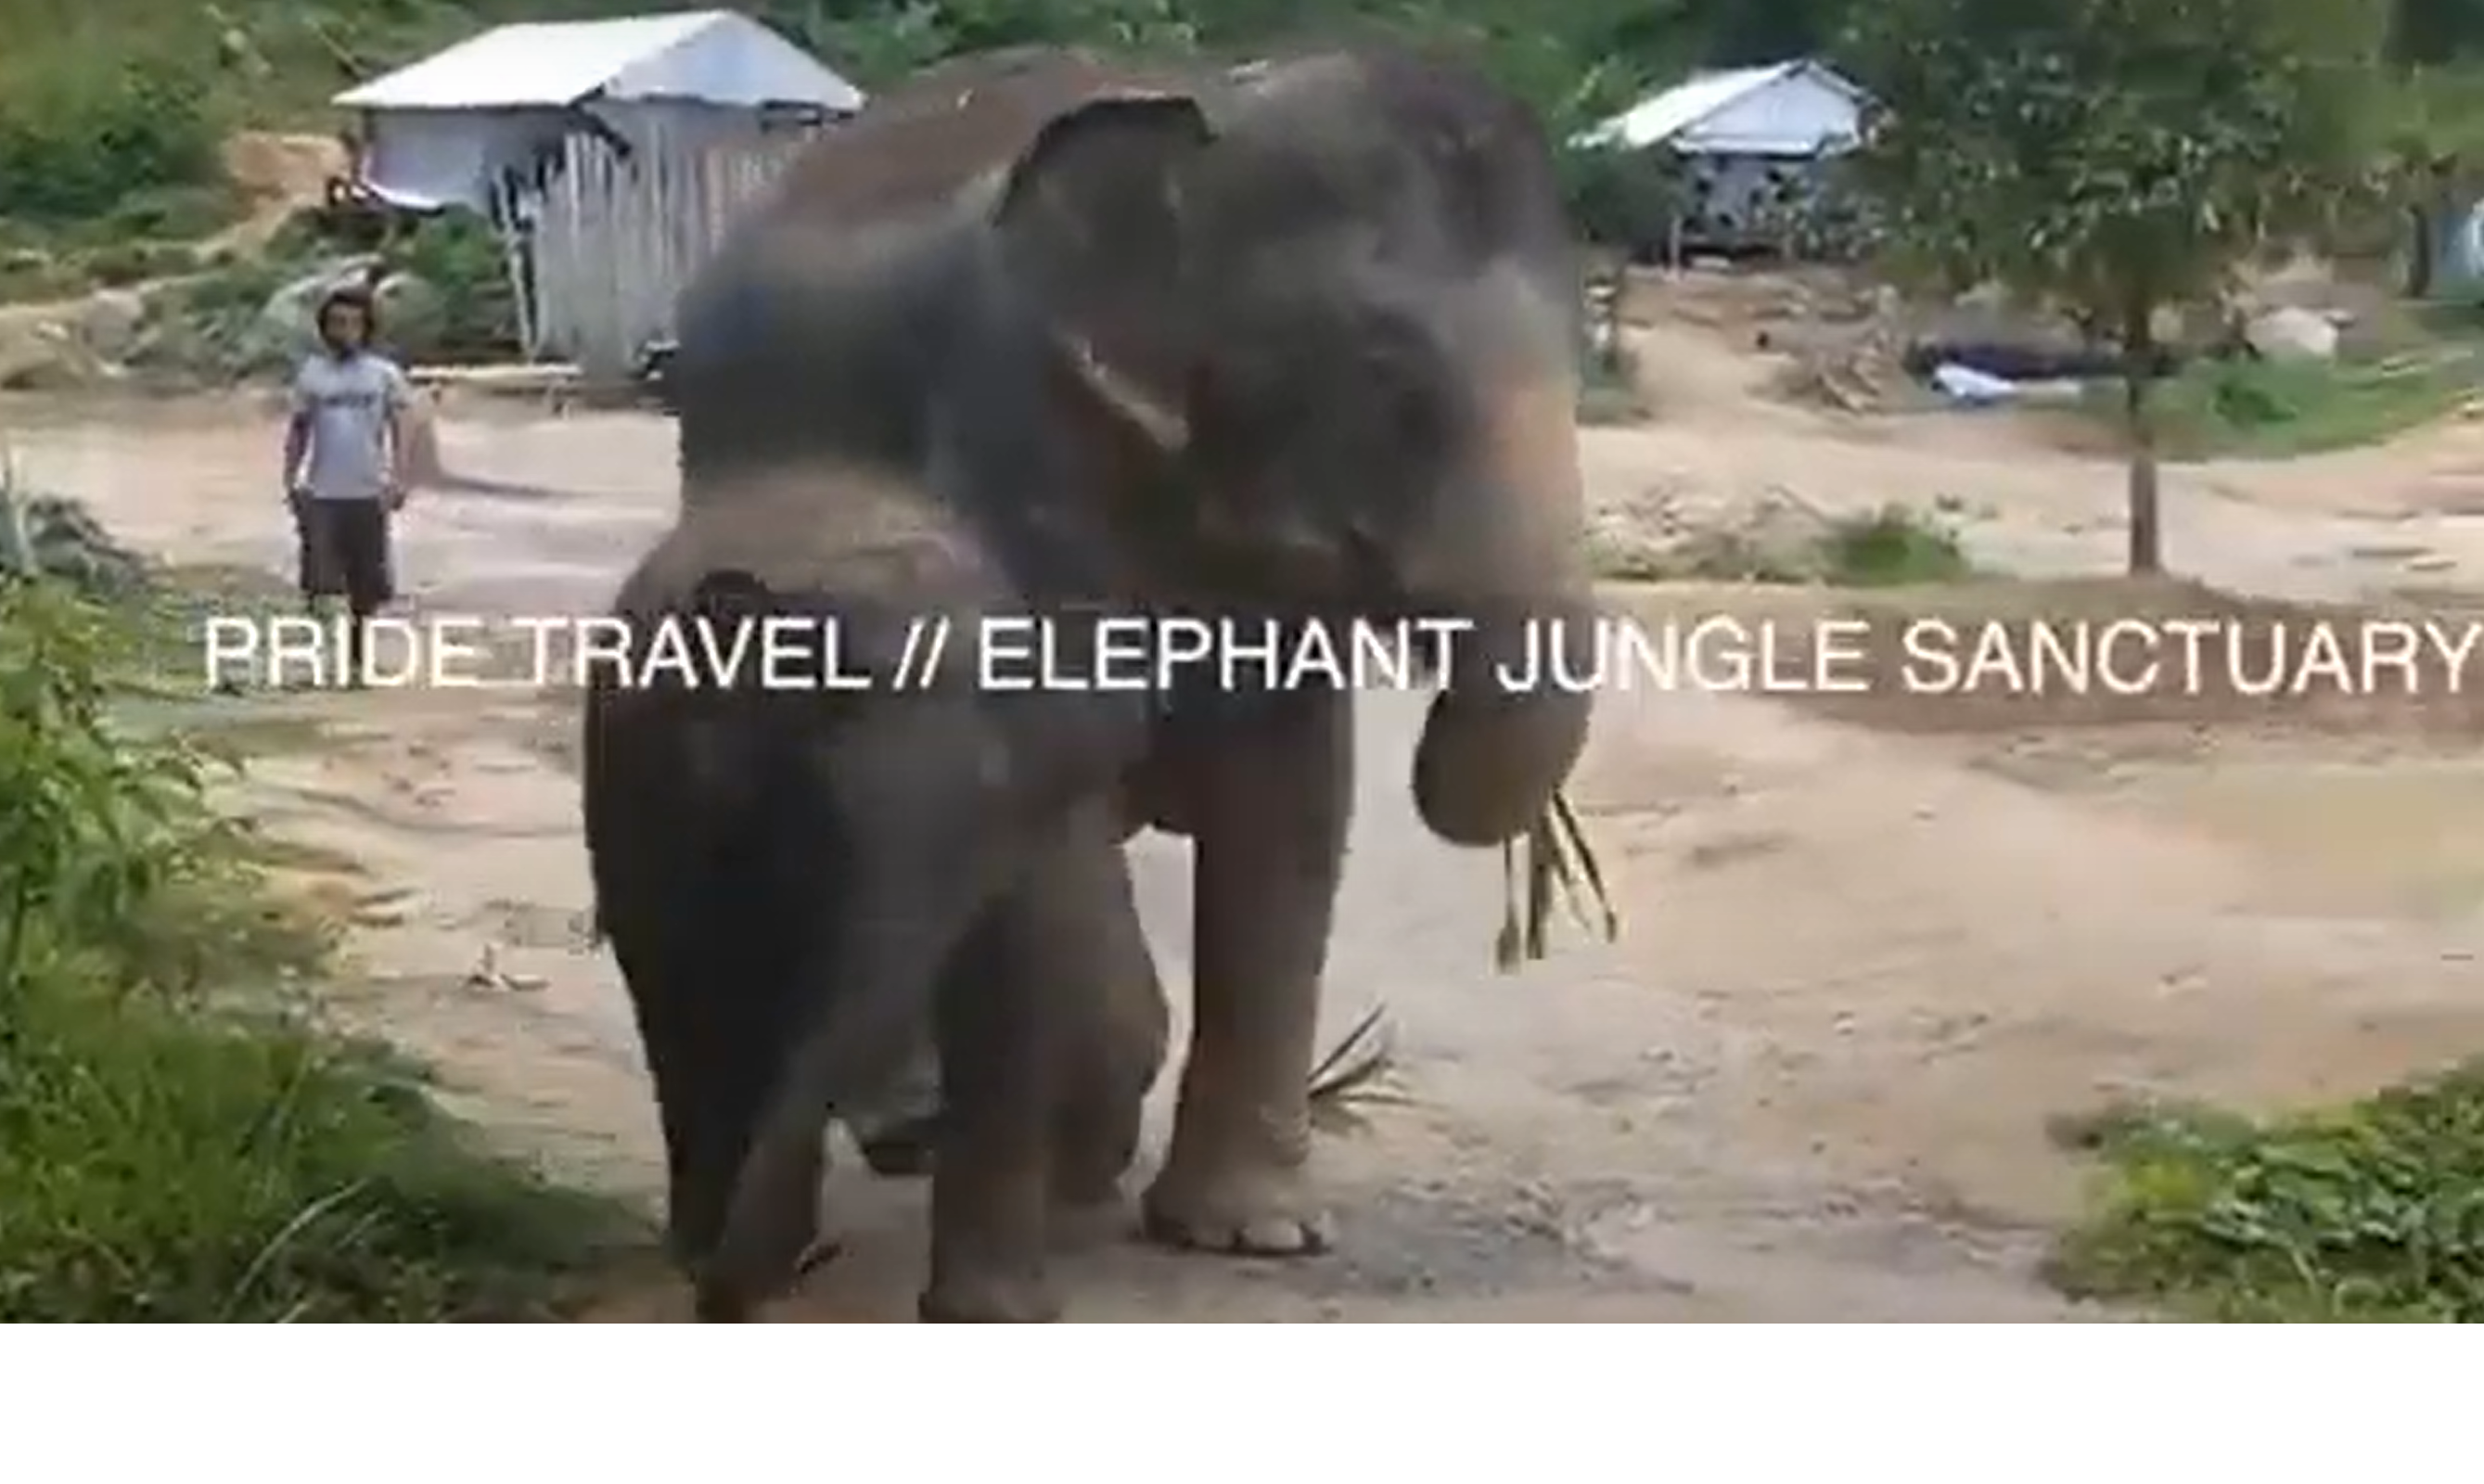 Phuket Elephant Jungle Sanctuary 2017   Pride Travel